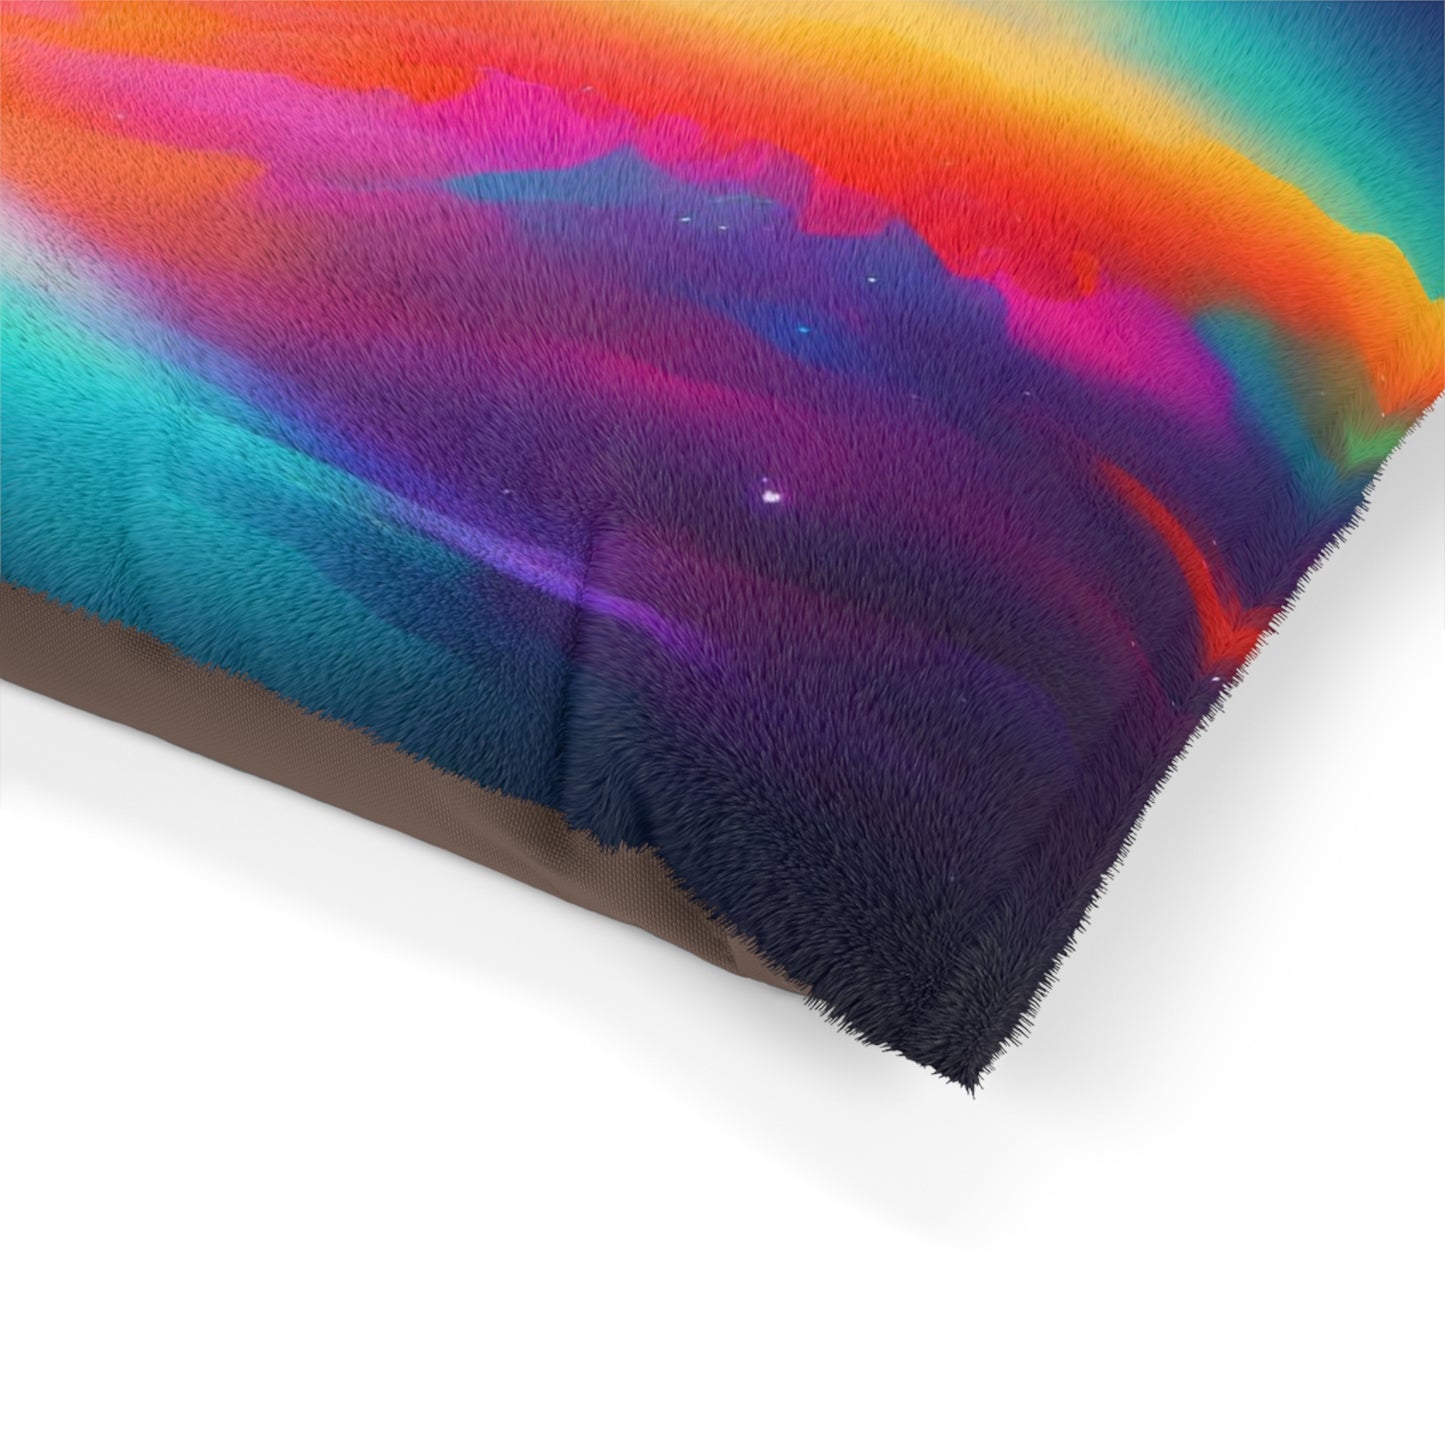 Niccie's Vibrant Colorful Pet Bed Comfy Design